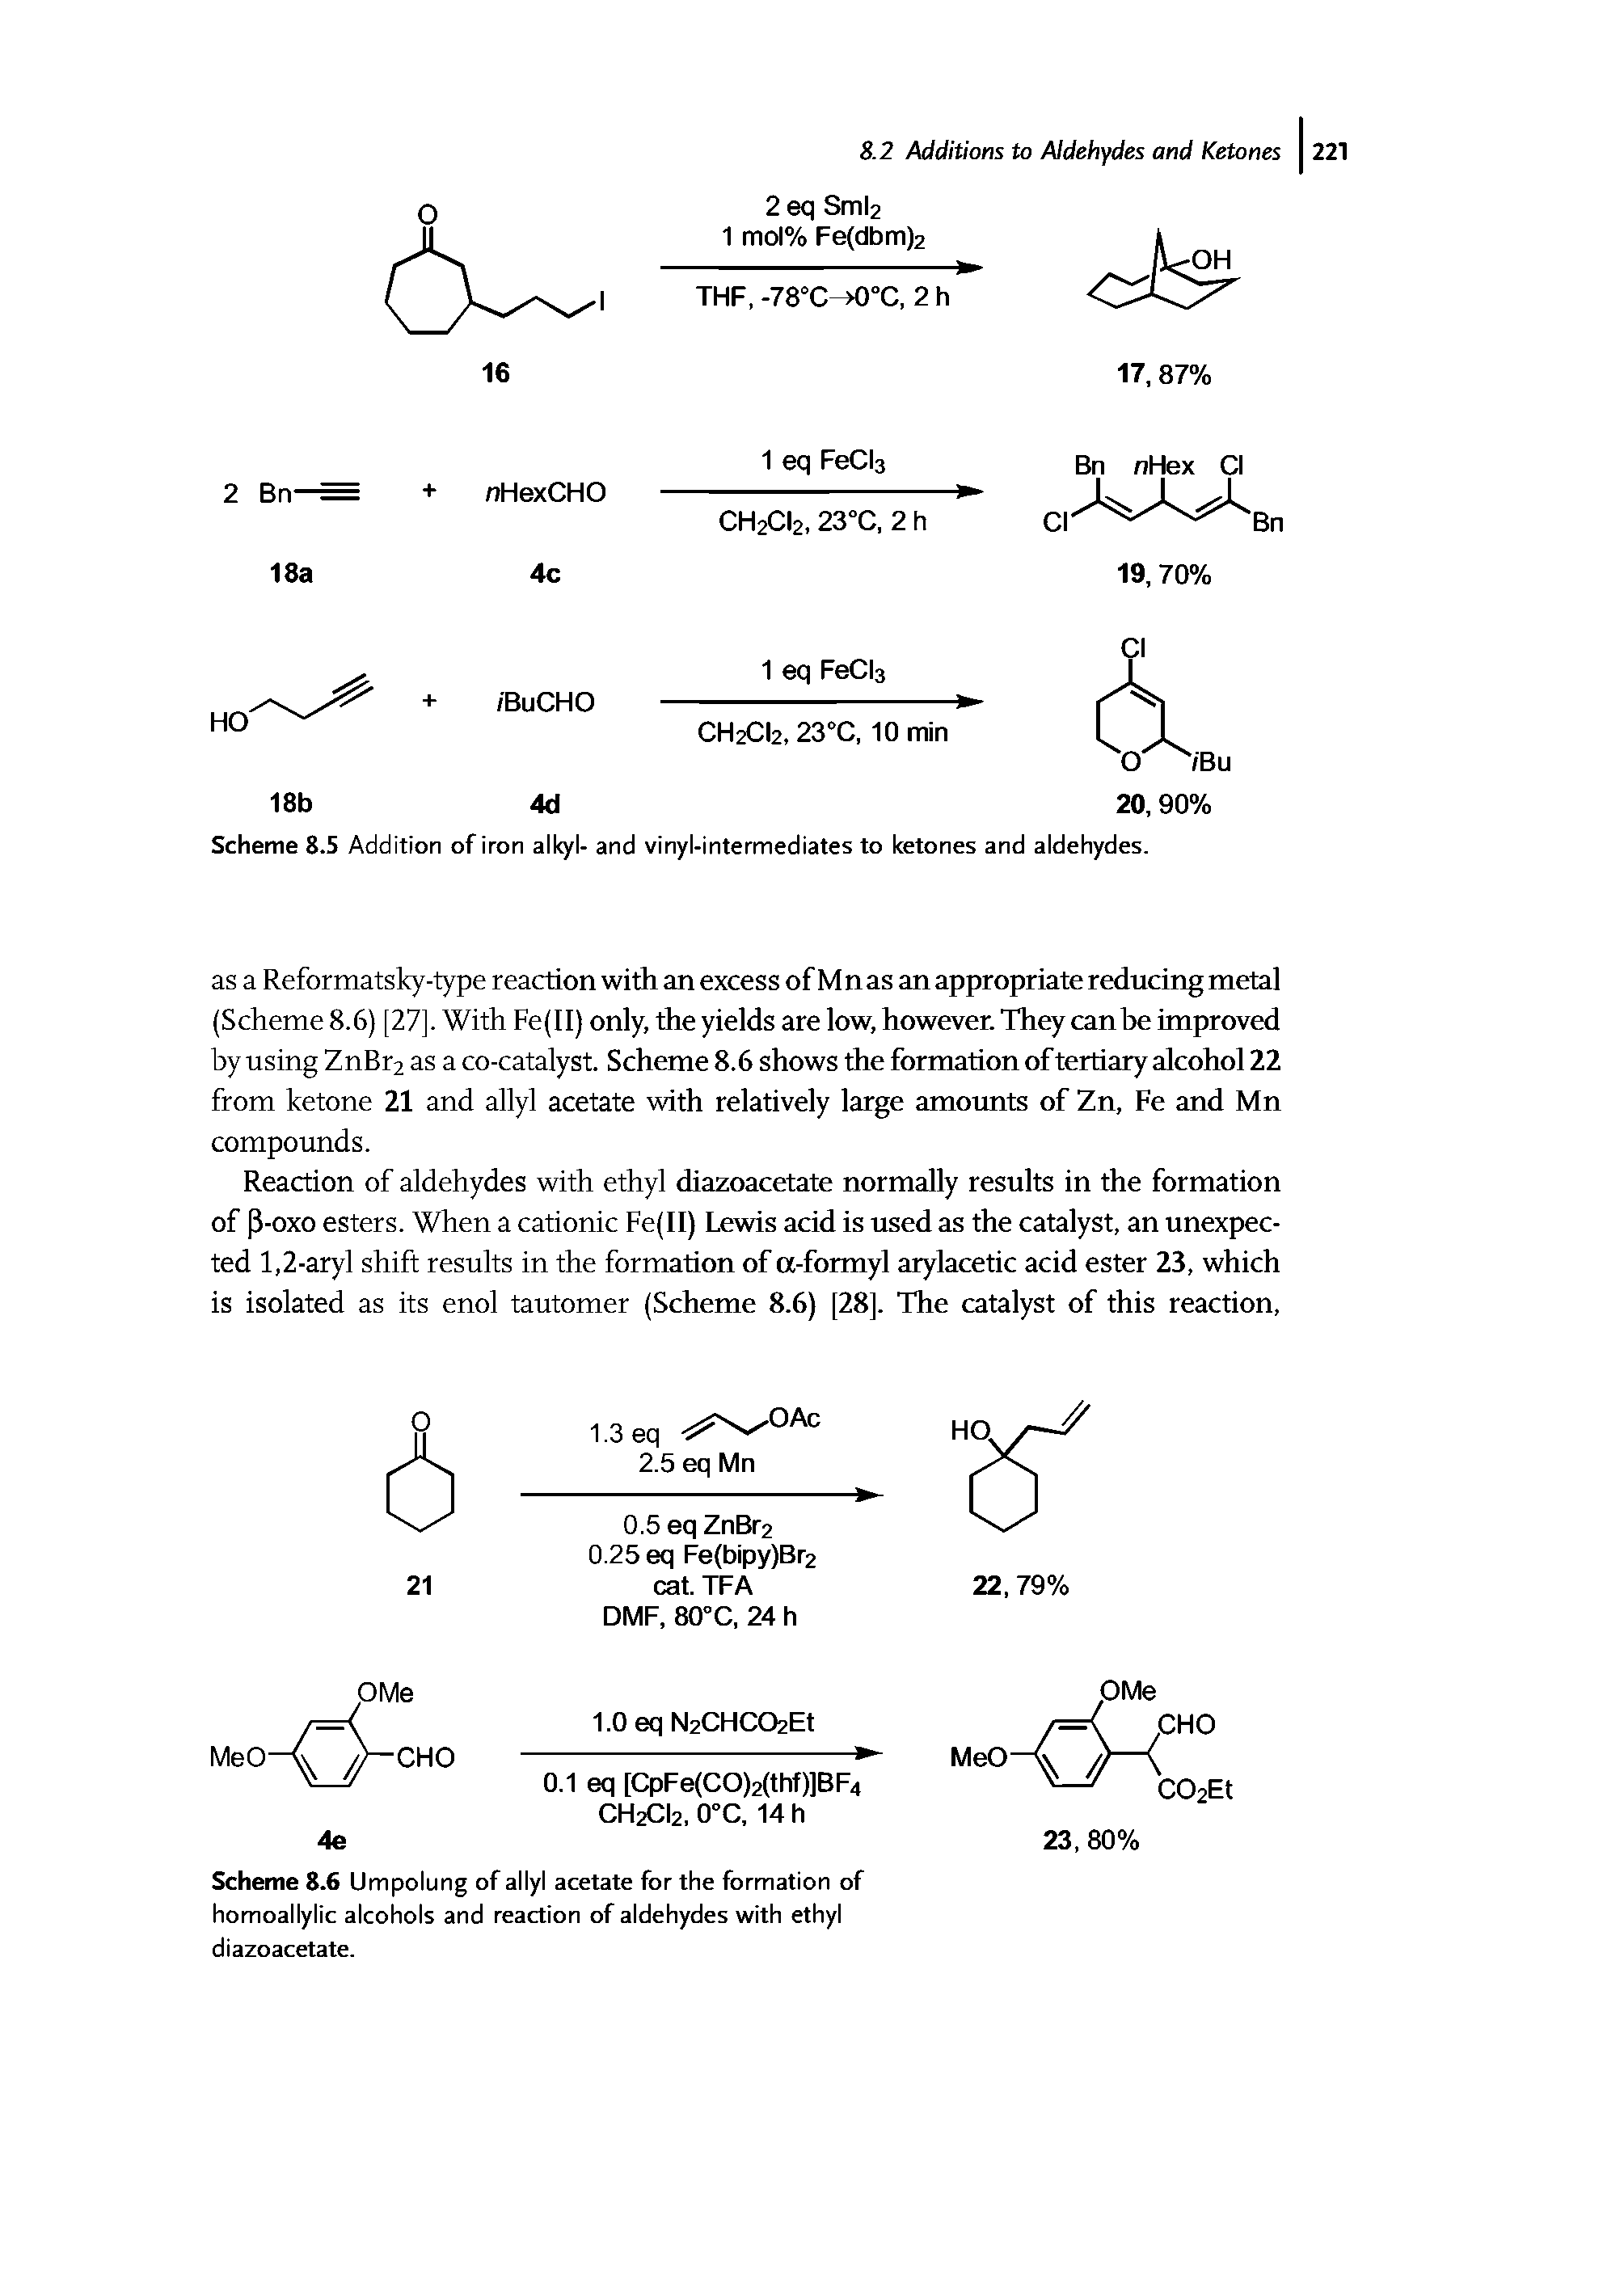 Scheme 8.5 Addition of iron alkyl- and vinyl-intermediates to ketones and aldehydes.